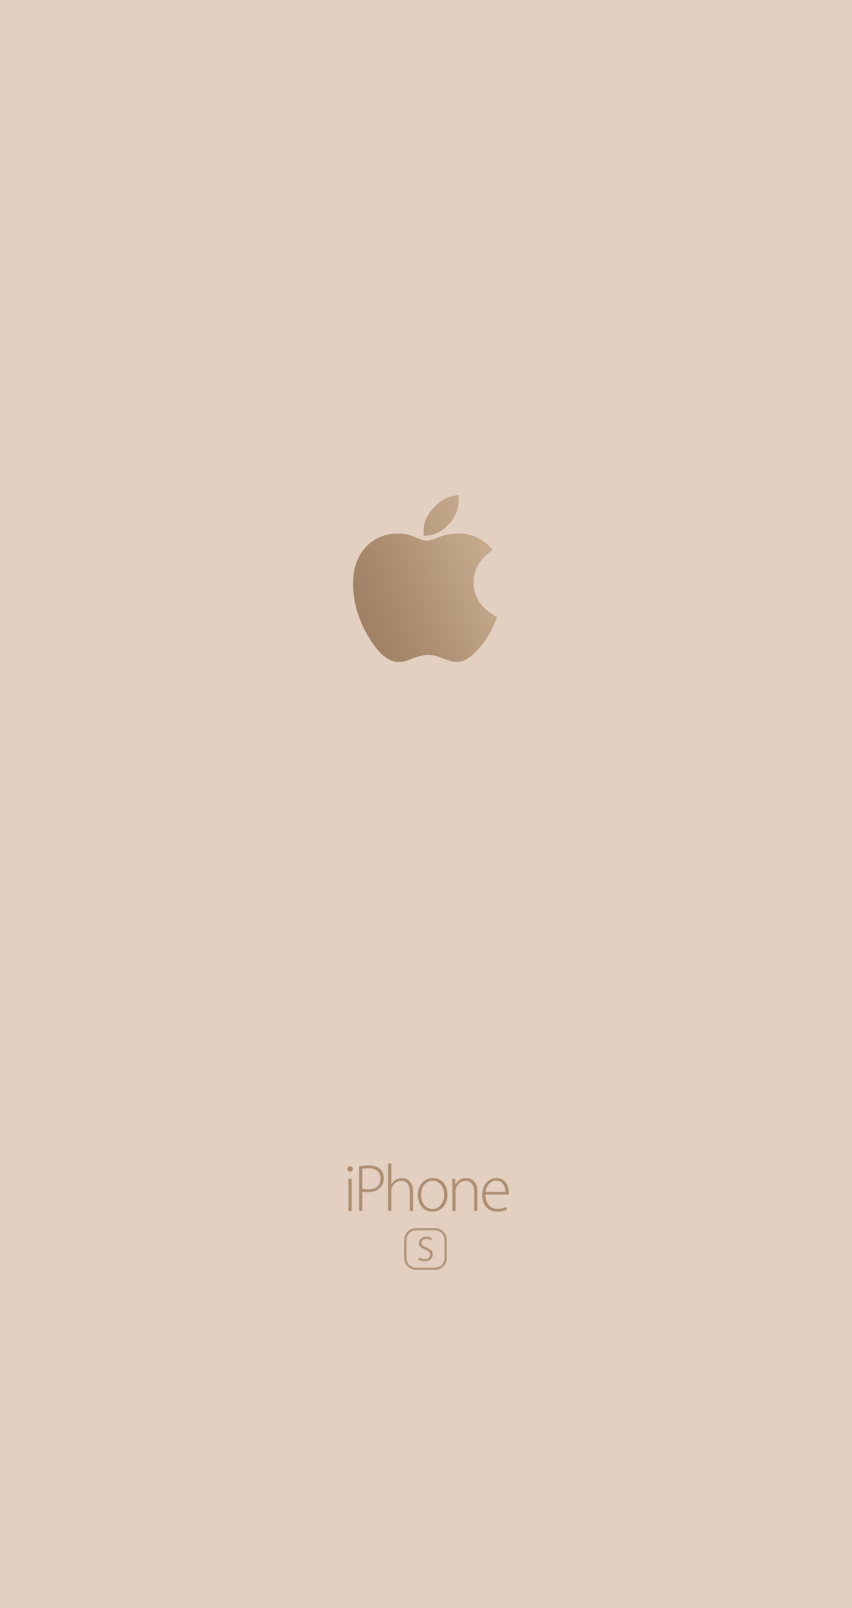 Apple Iphone Logo Gold